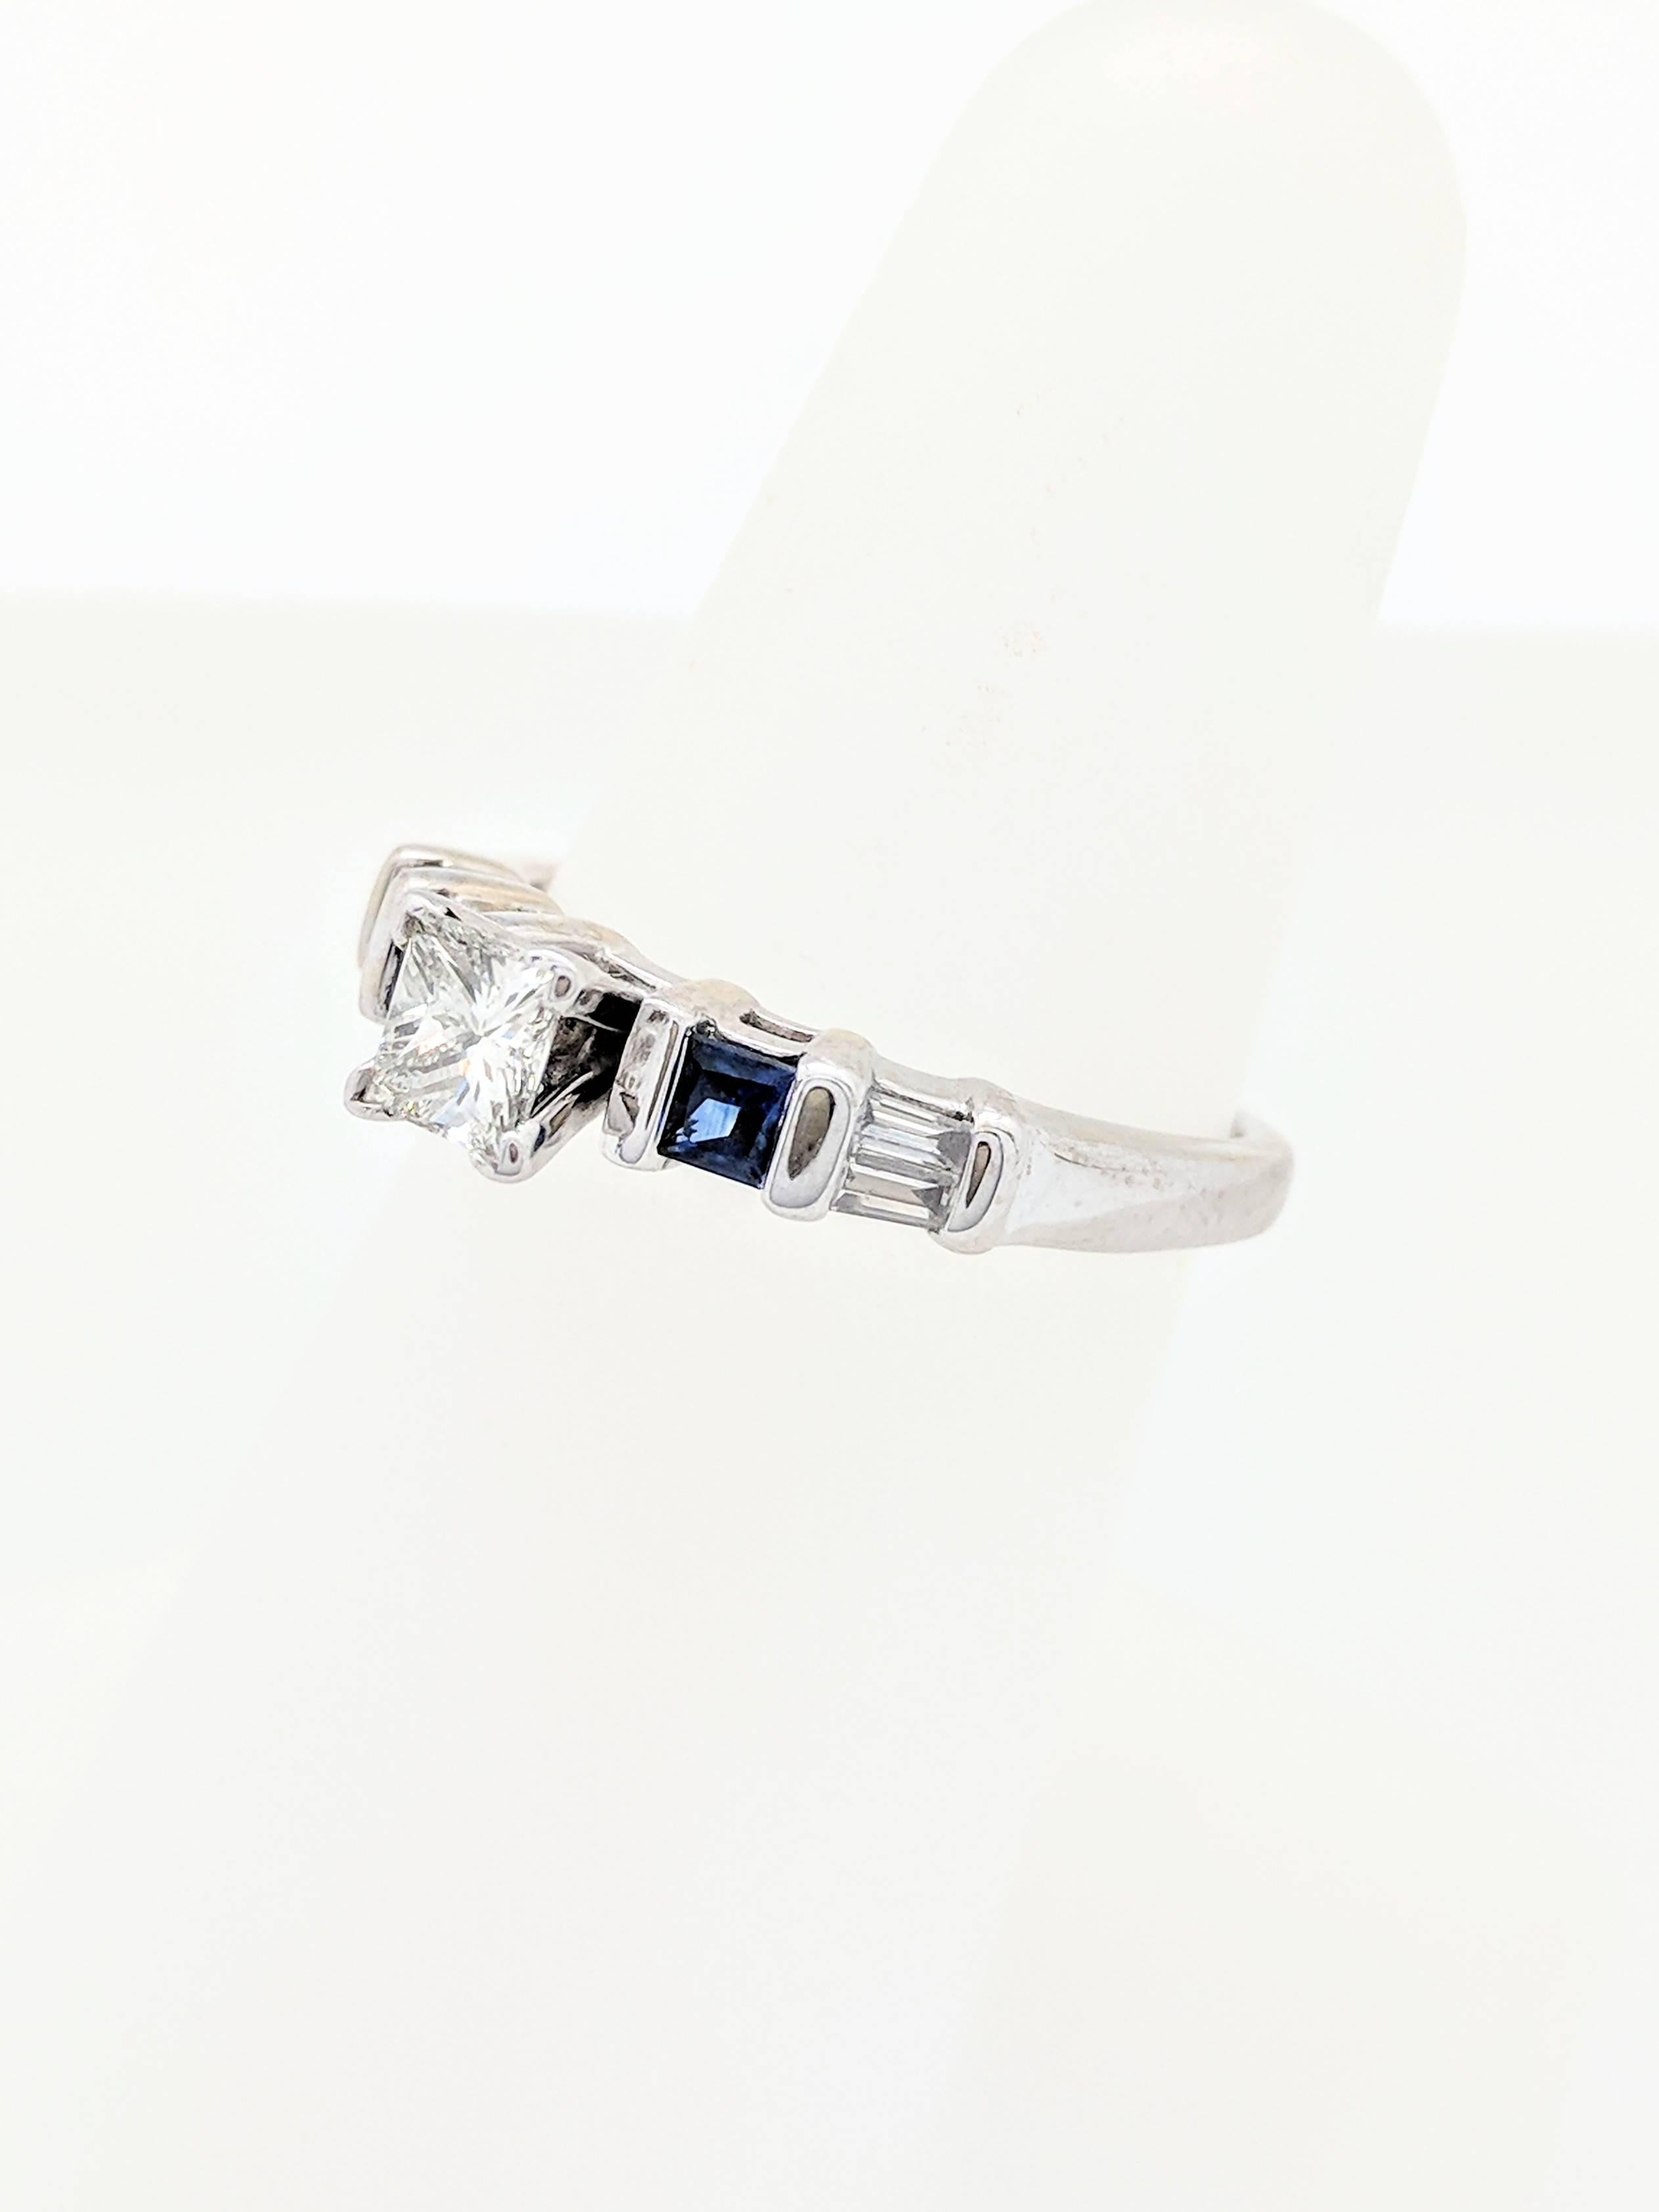 10 Karat White Gold .63 Carat Diamond and Sapphire Engagement Ring 2